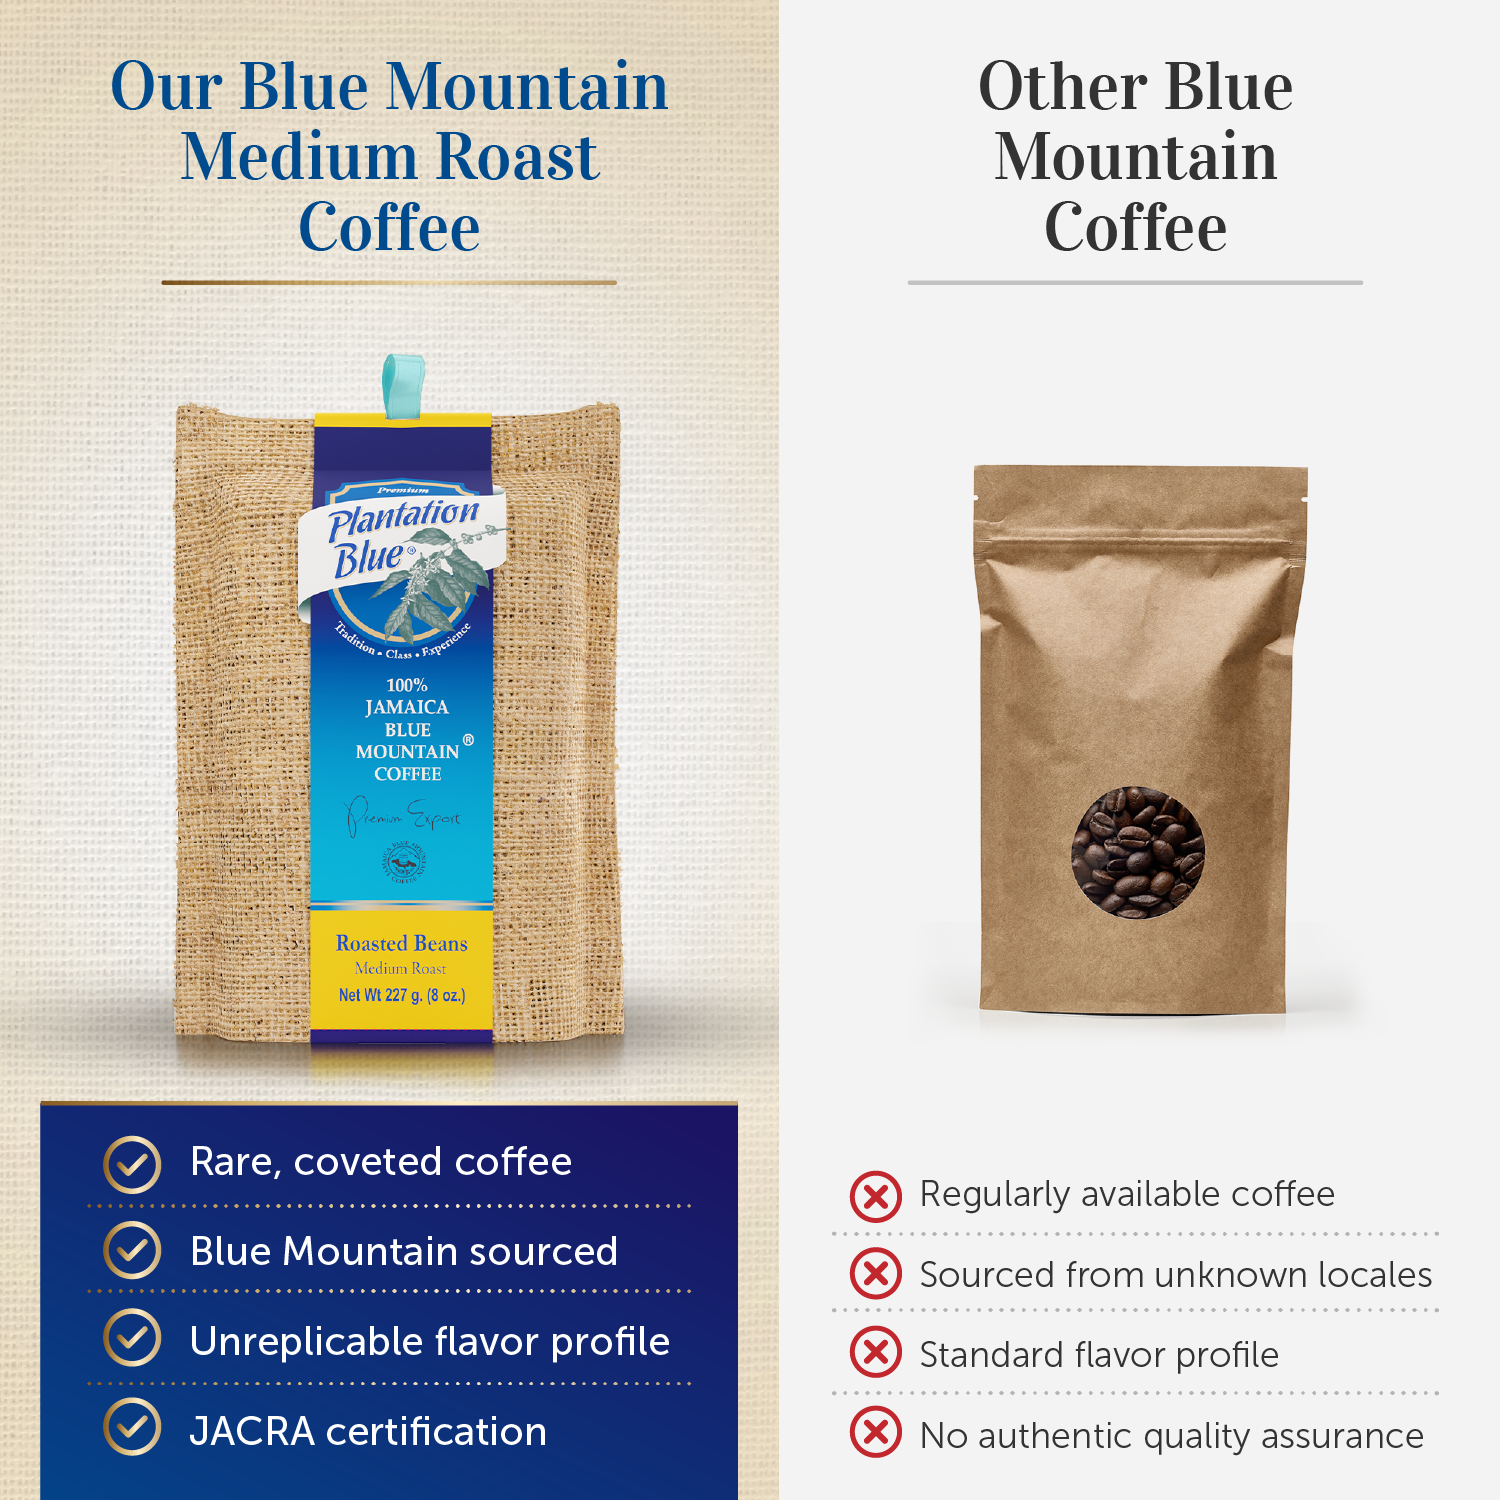 Plantation Blue 100% Jamaica Best Blue Mountain Coffee (8oz whole beans)